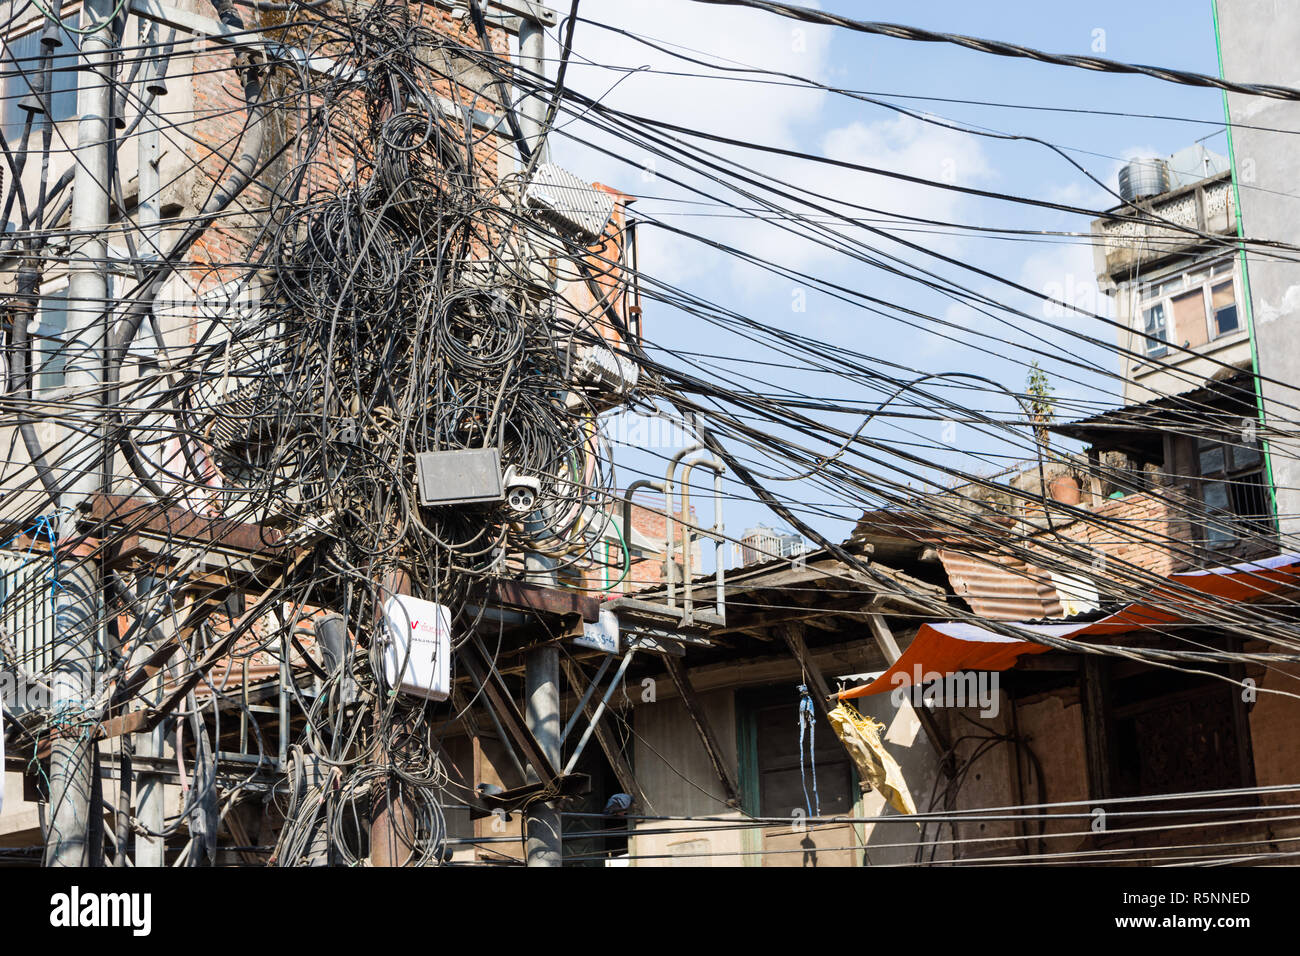 Utility pole with lots of entangled wires, Kathmandu, Nepal Stock Photo